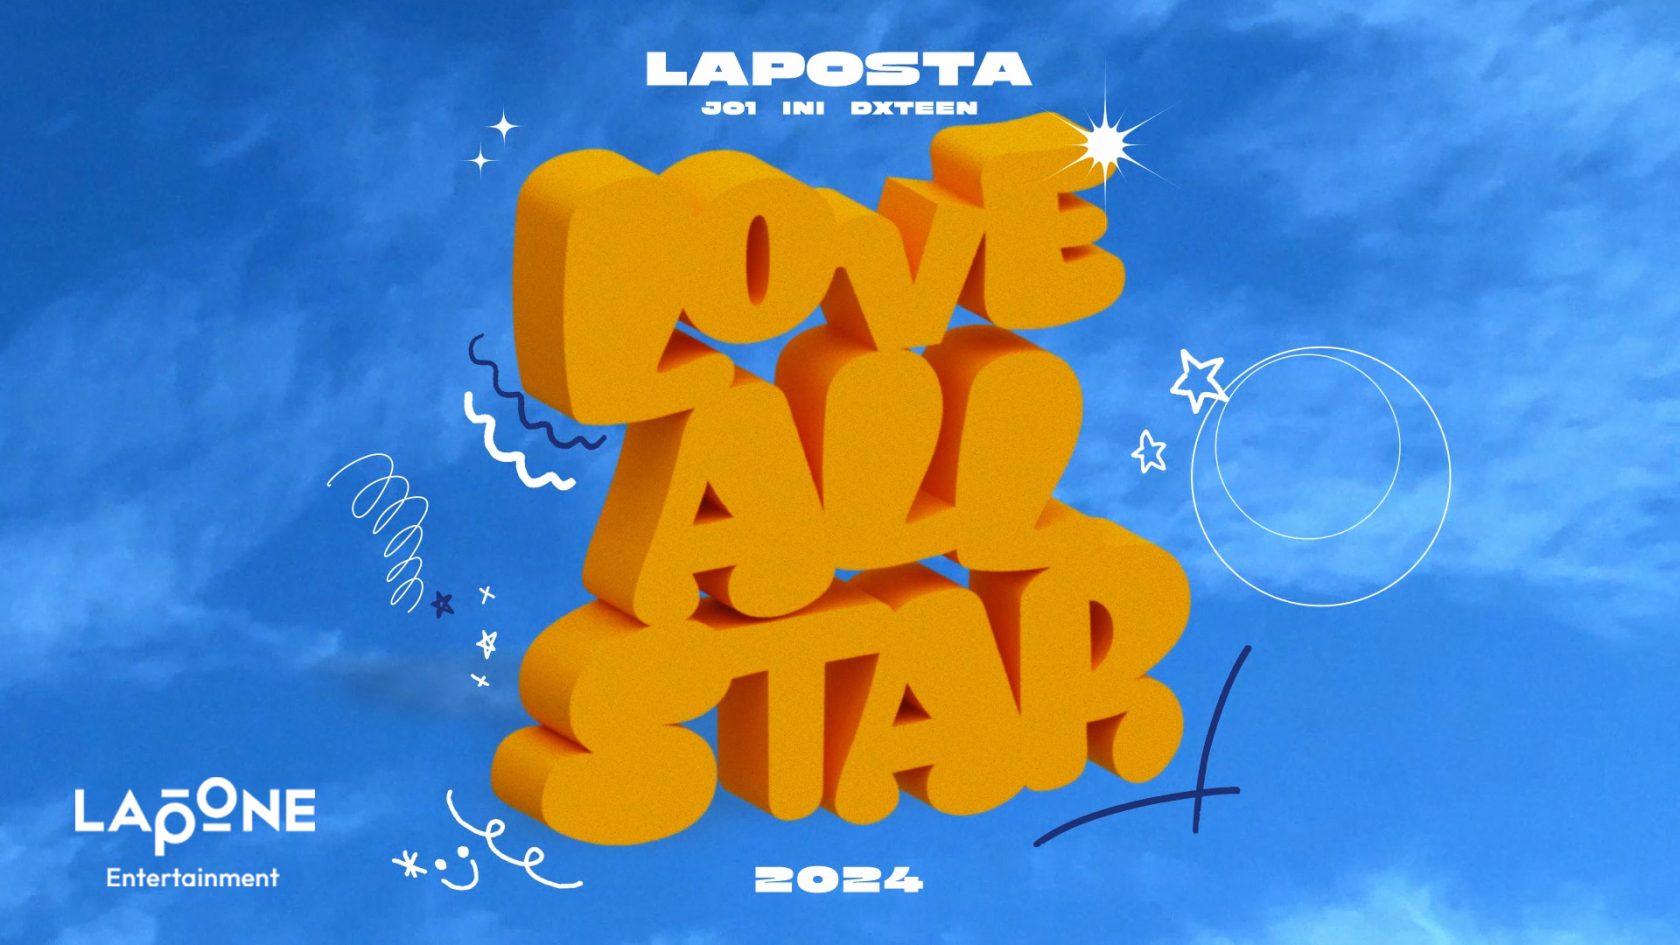 JO1、INI、DXTEEEN 初の3組合同楽曲が配信開始!「LAPOSTA 2024」のテーマソング「LOVE ALL STAR」